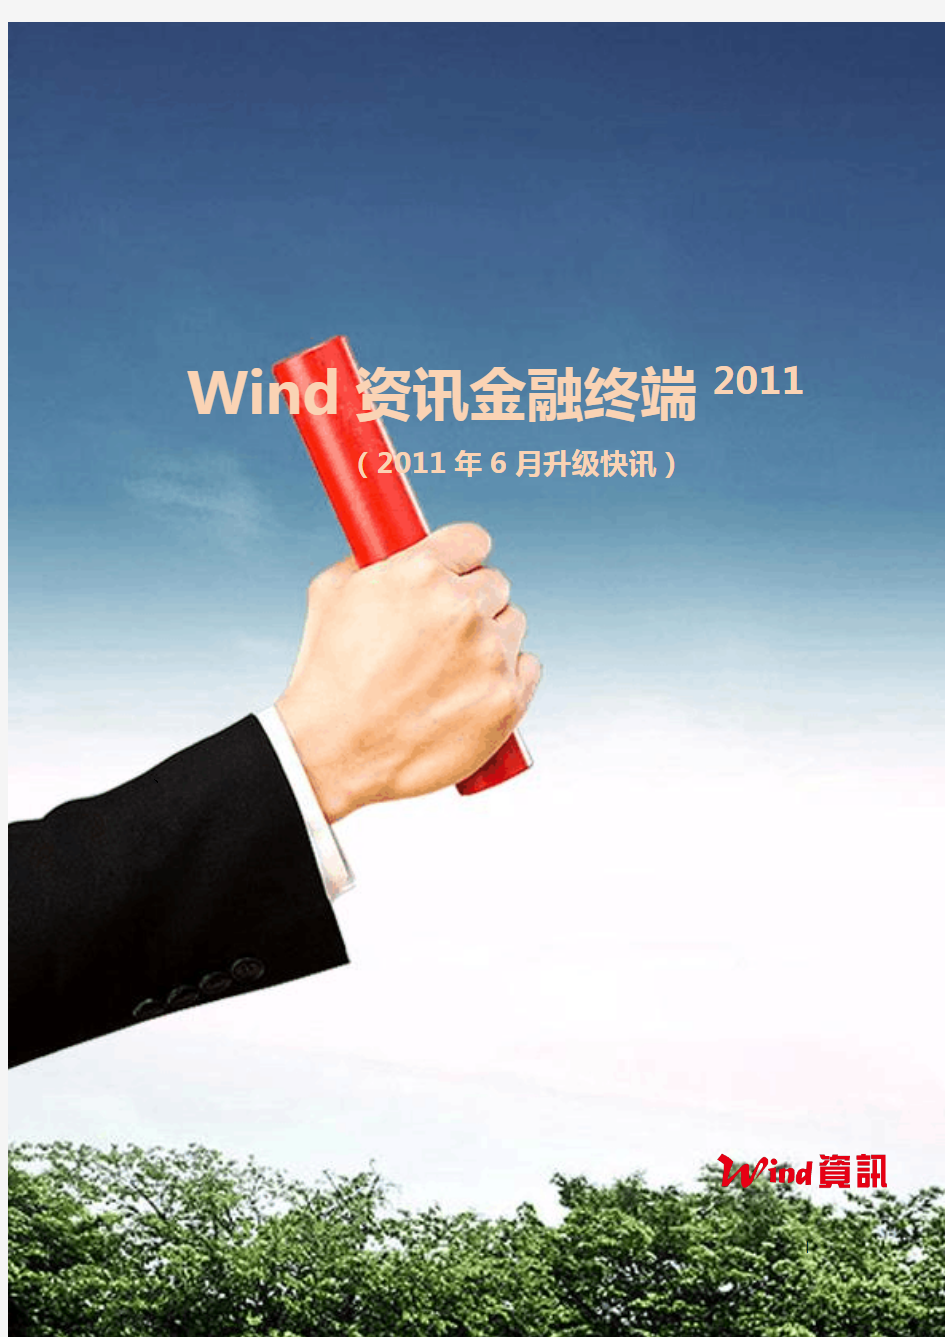 Wind资讯金融终端快讯(2011年6月)